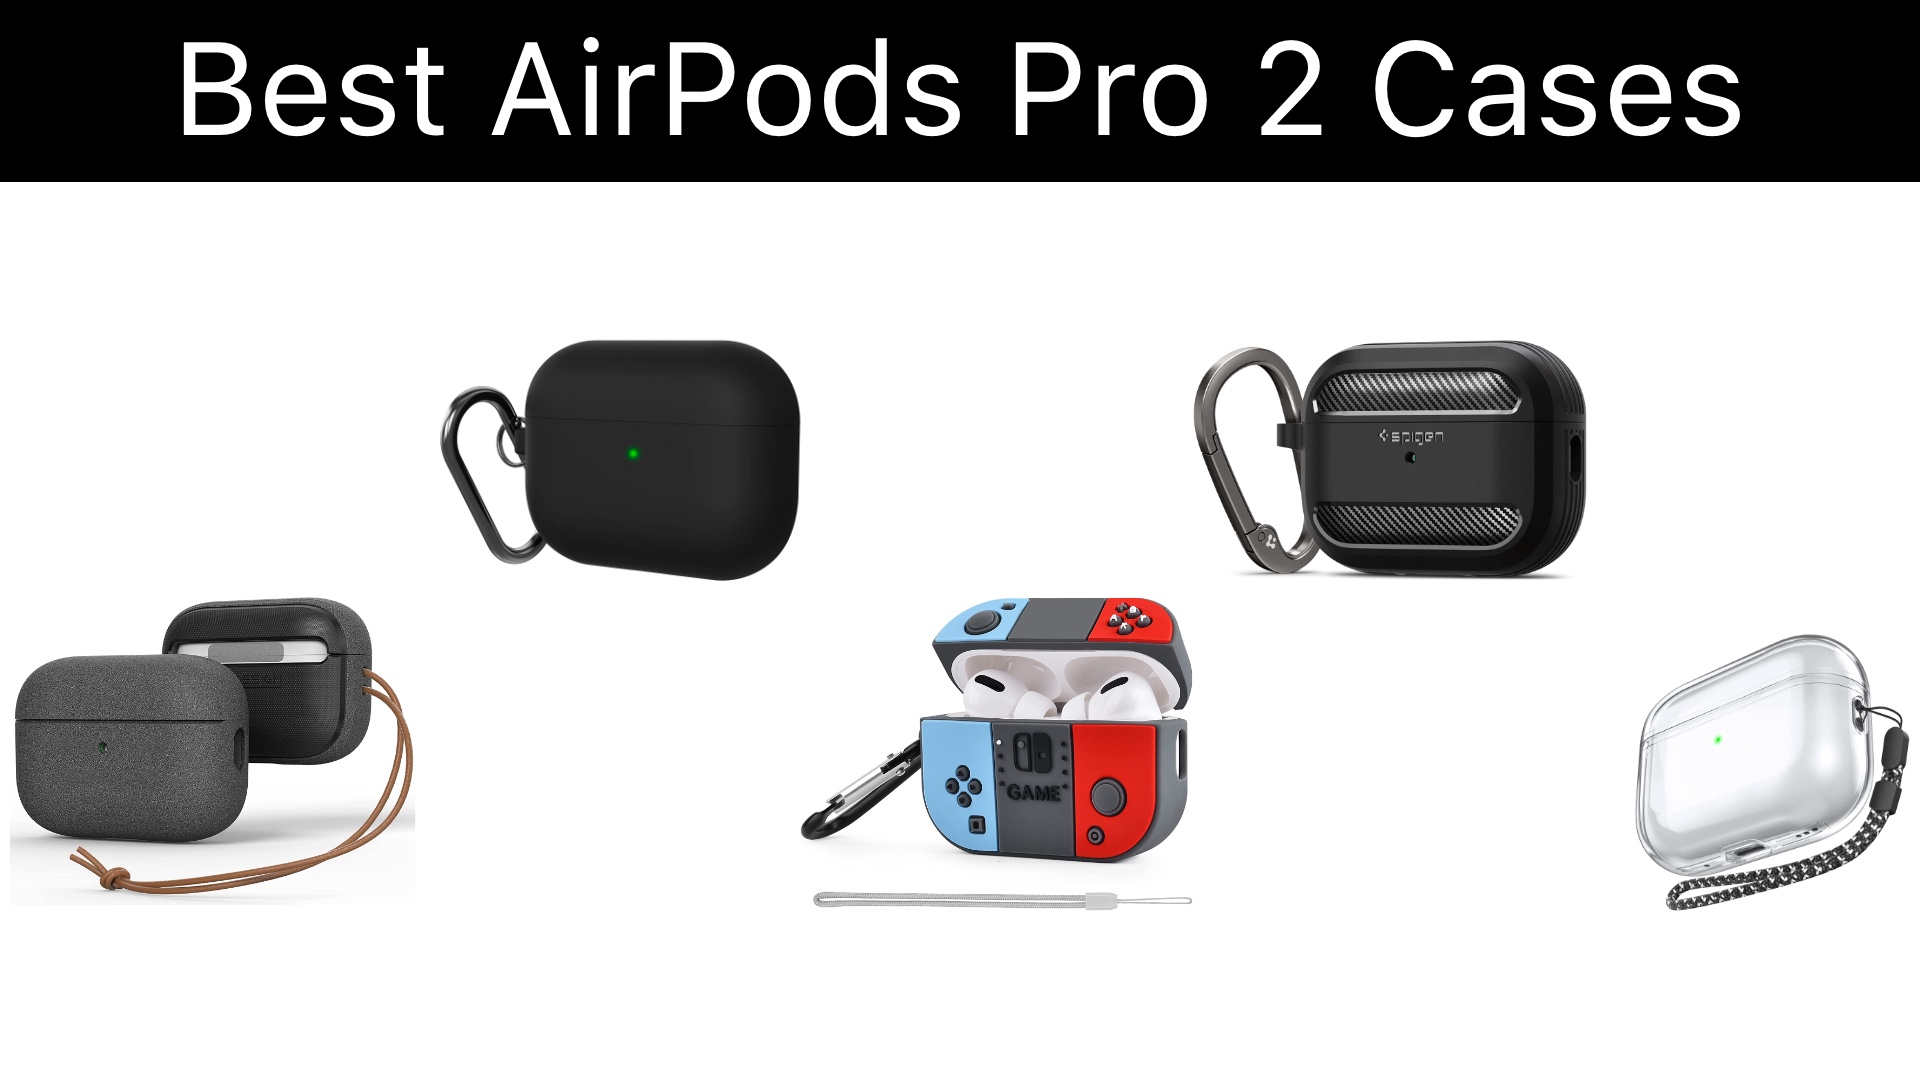 AirPod Pro 2 caseless